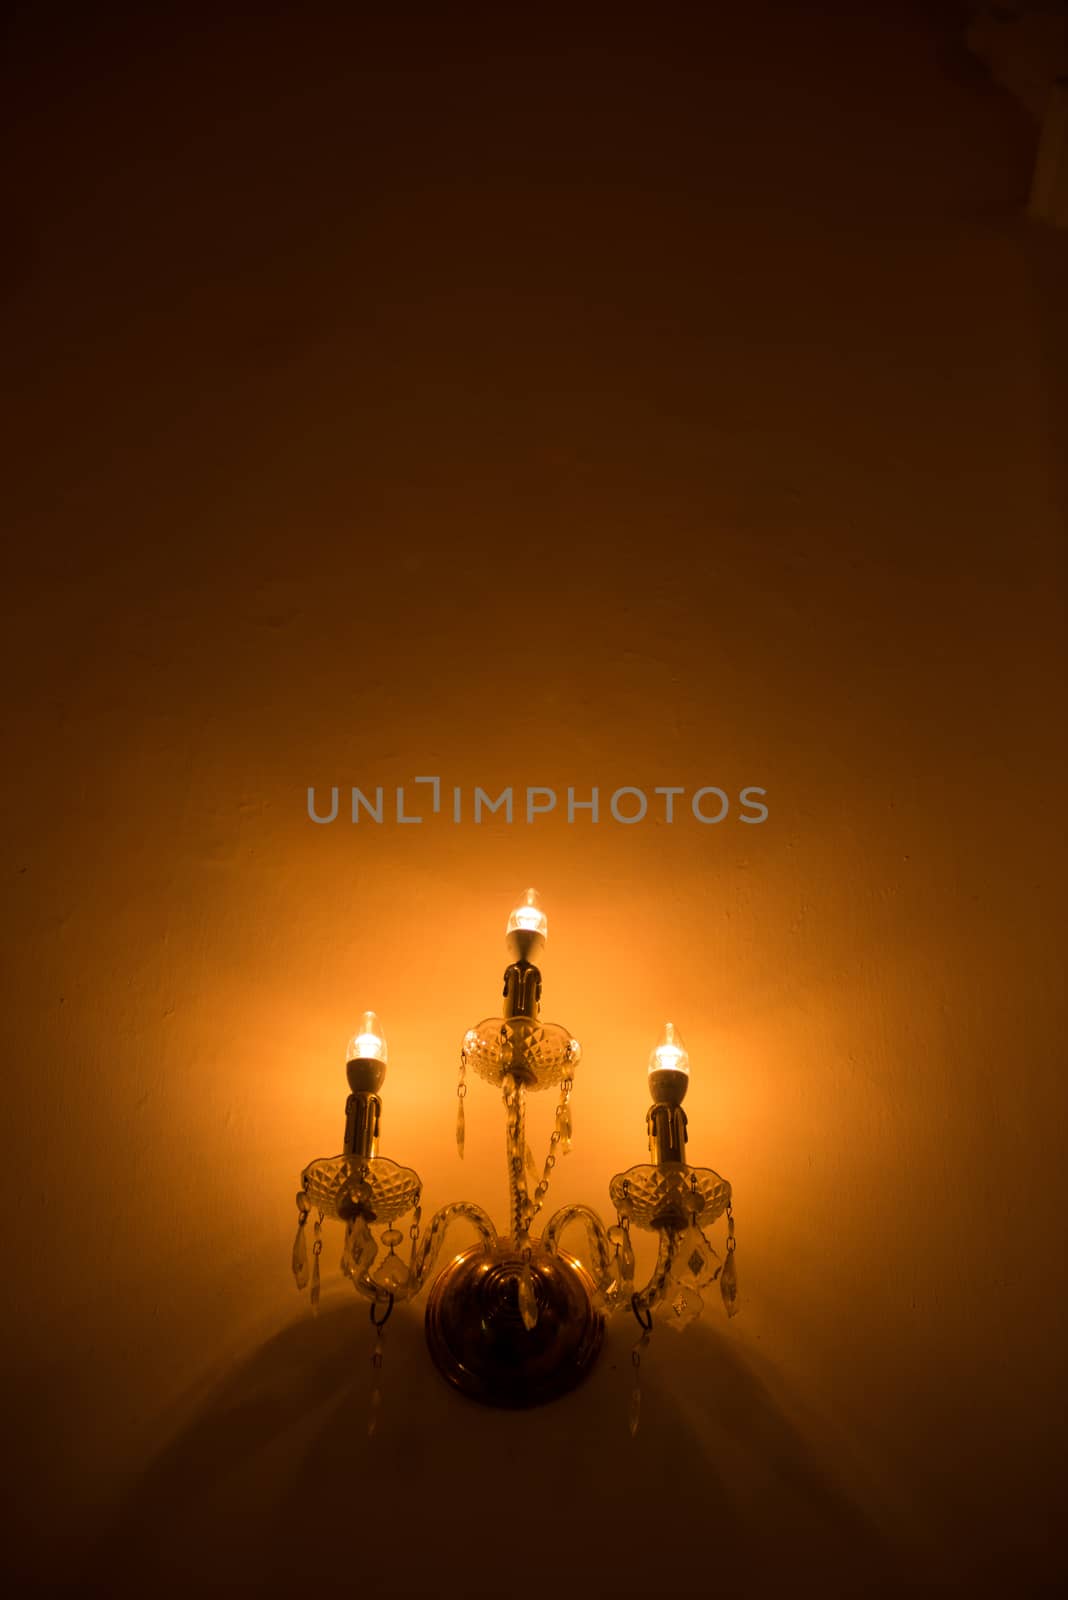 artificial candlesticks illuminating dark wall background